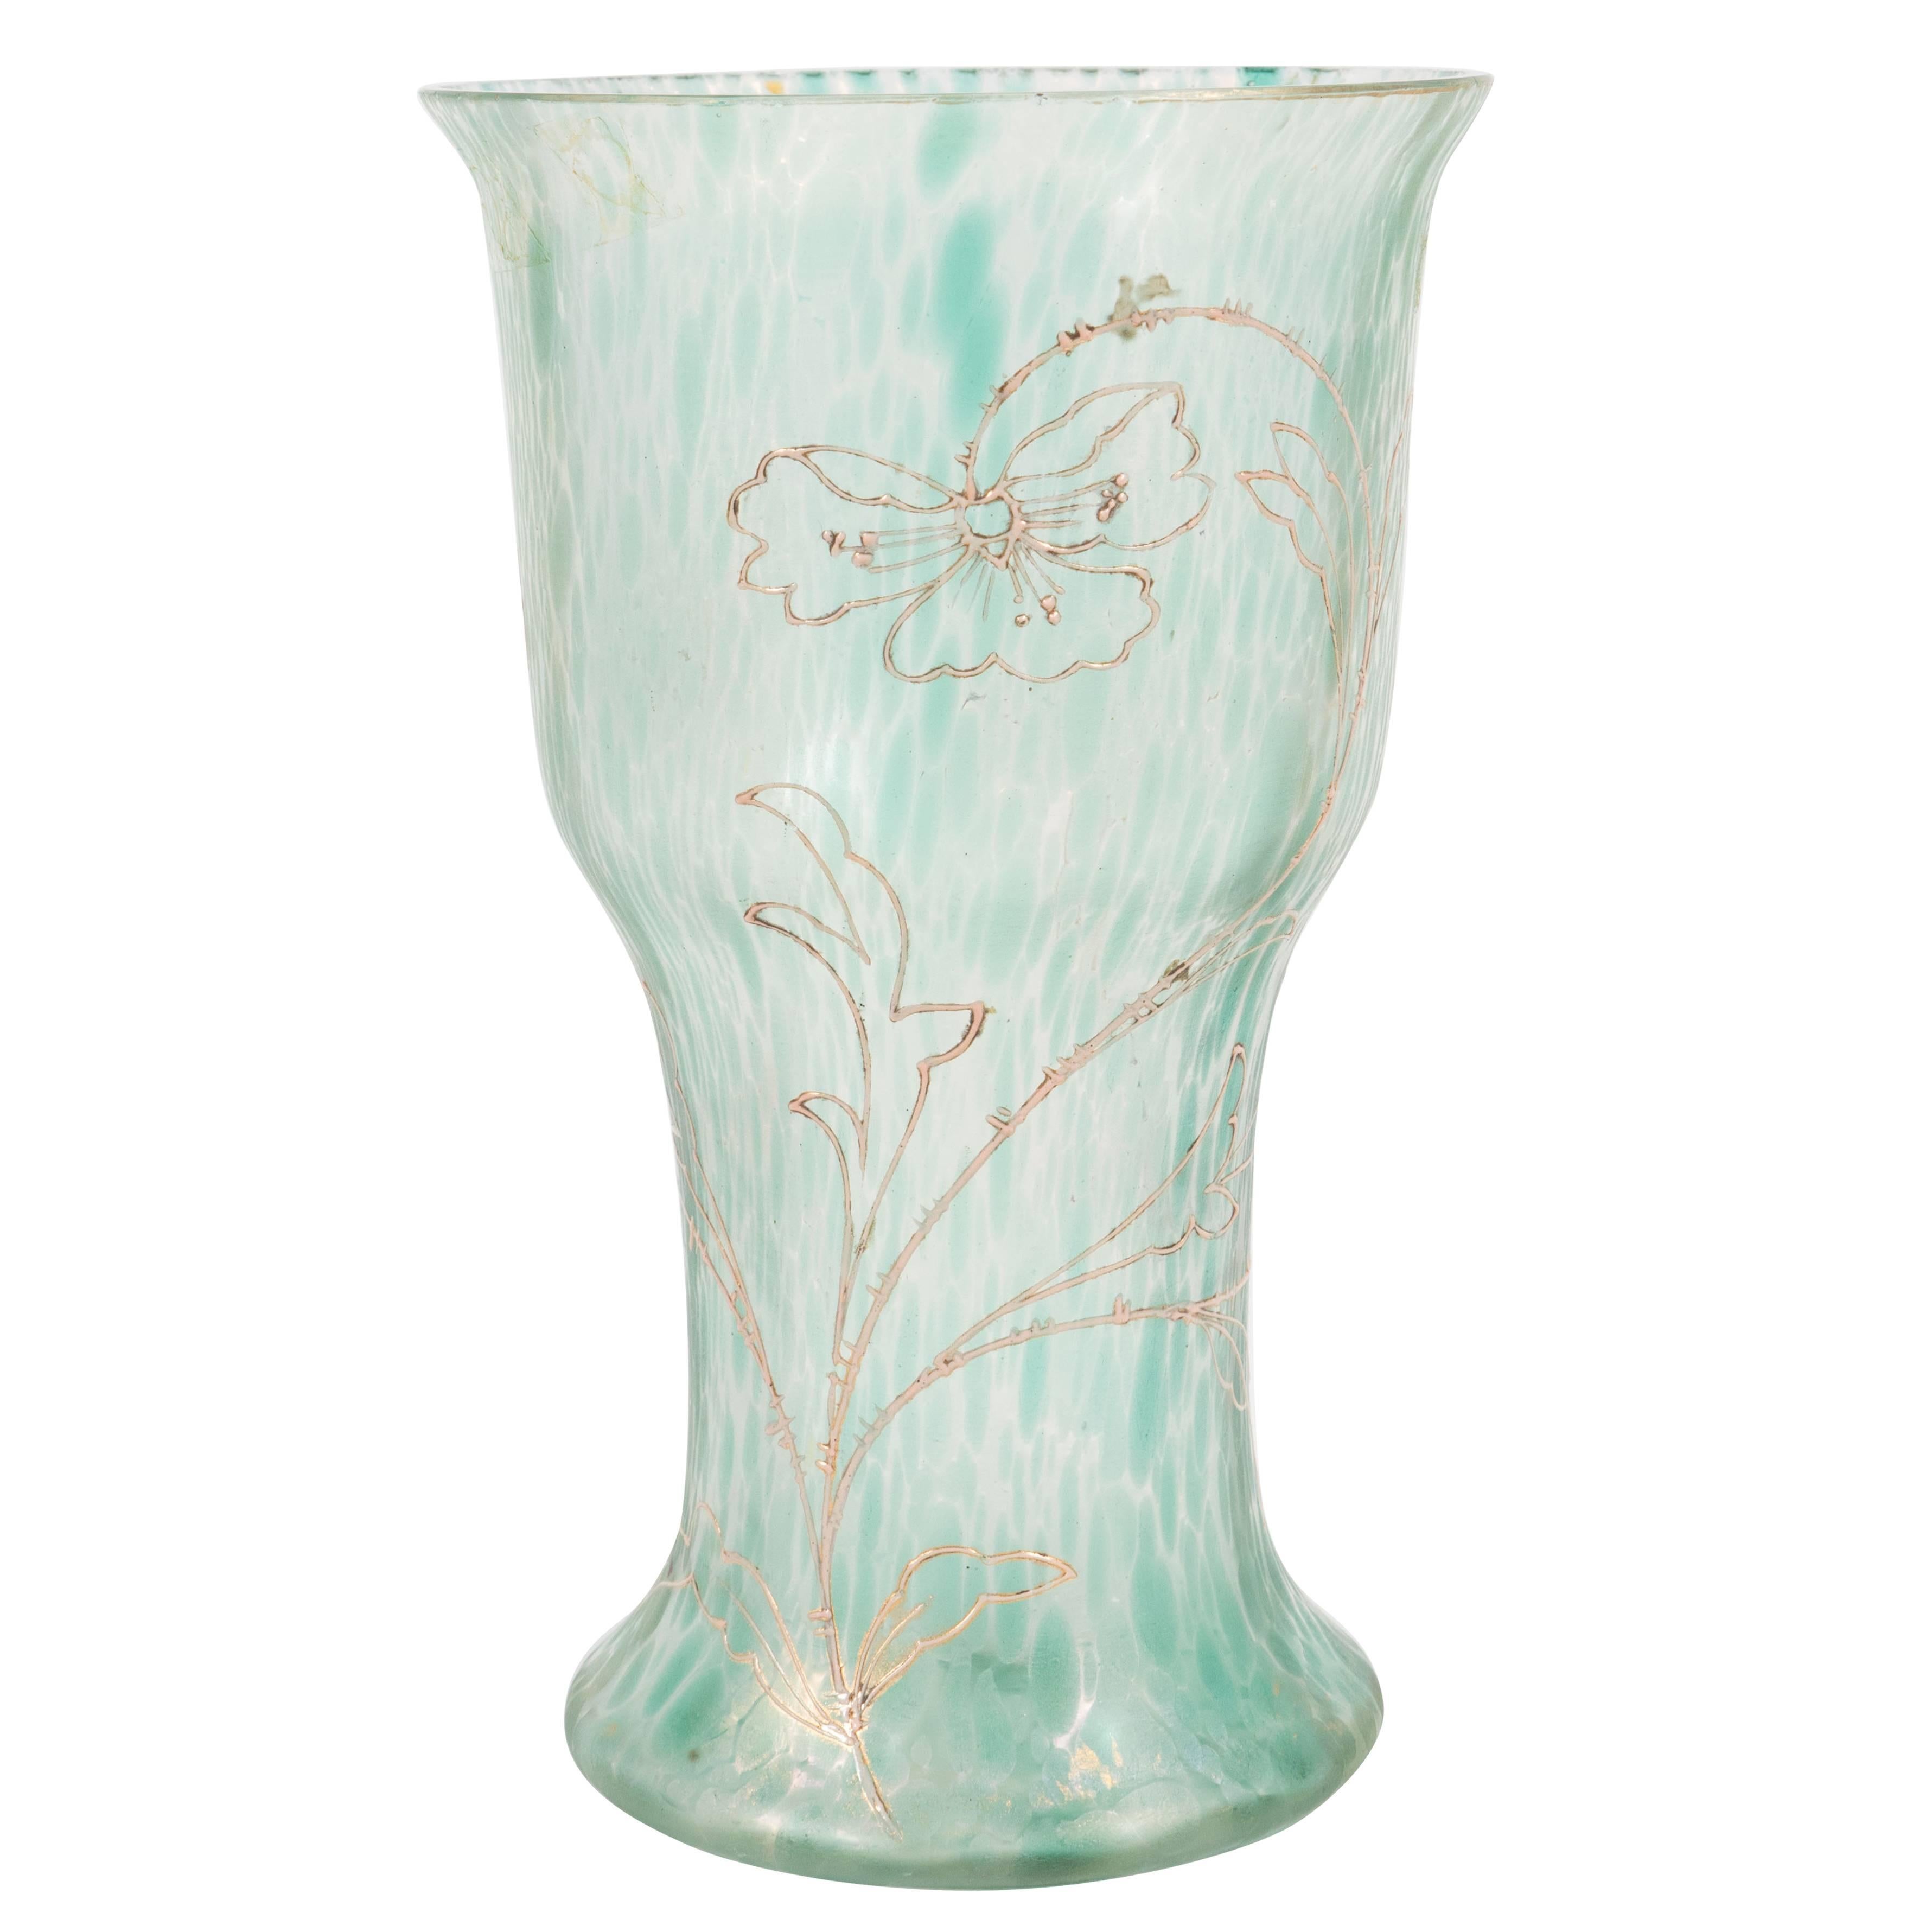 Art Nouveau Austrian Art Glass Vase in Green Iridescent and Gold Relief Vine